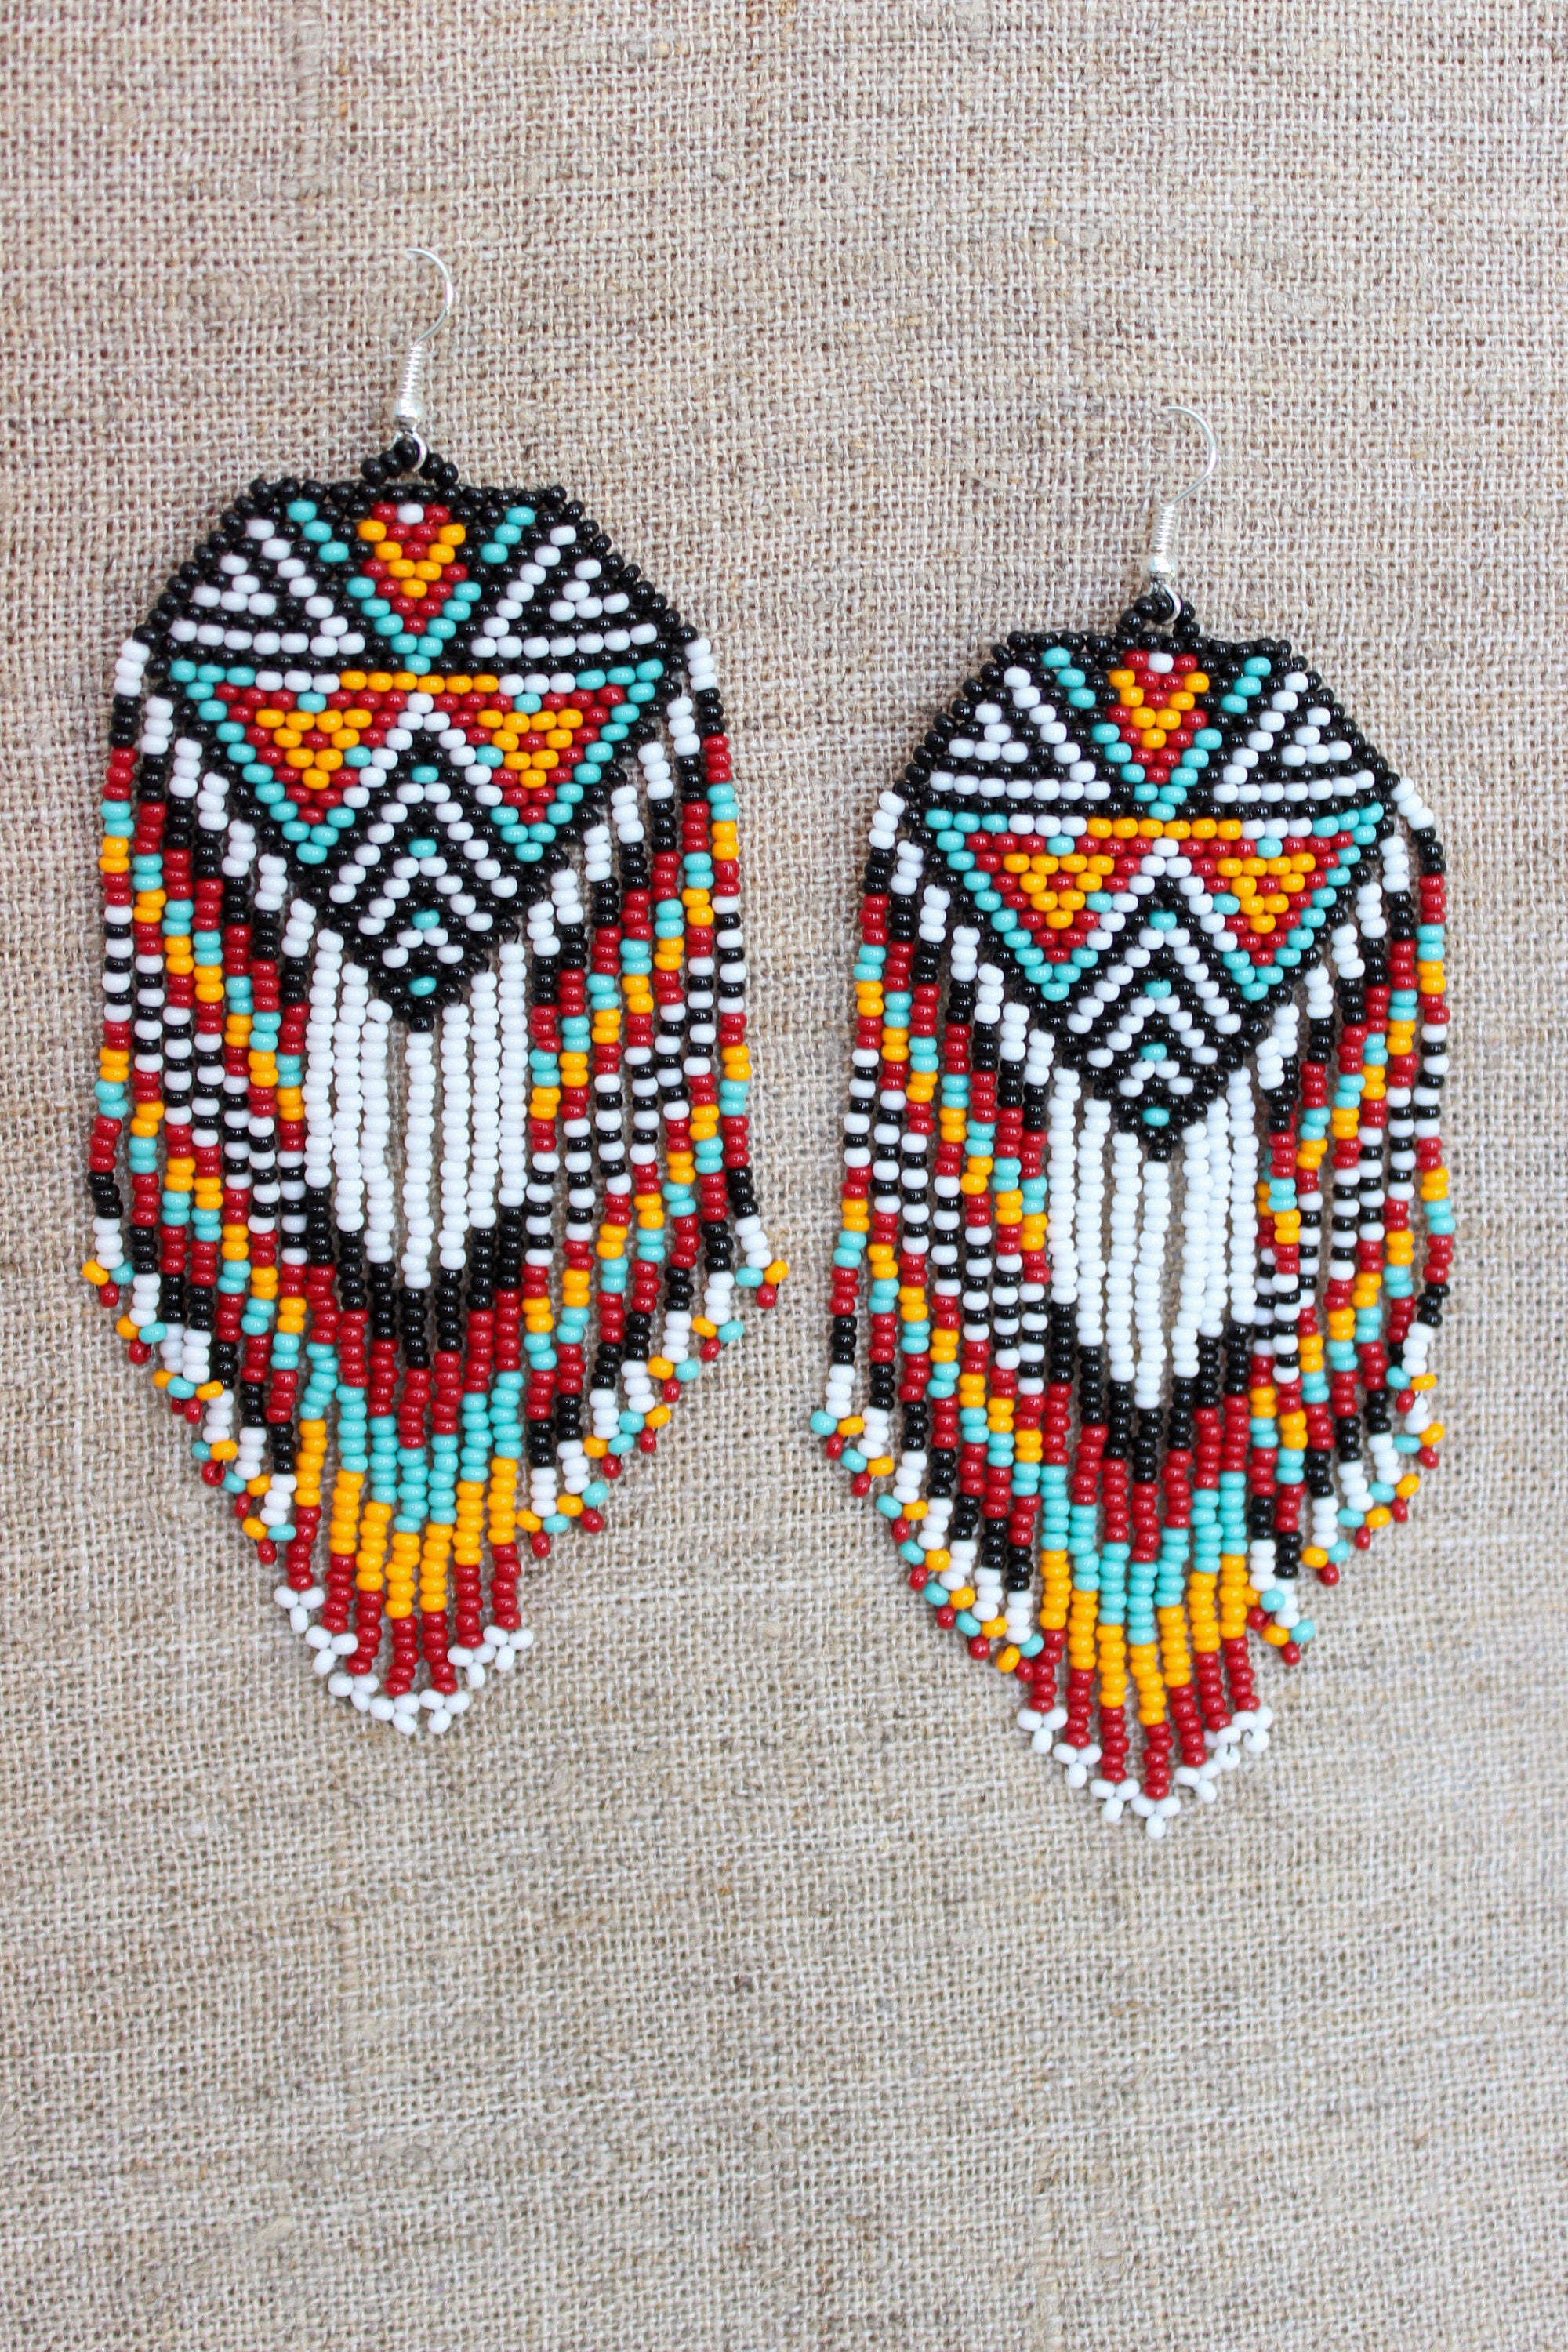 Beaded earrings earrings with fringe native beaded earrings | Etsy